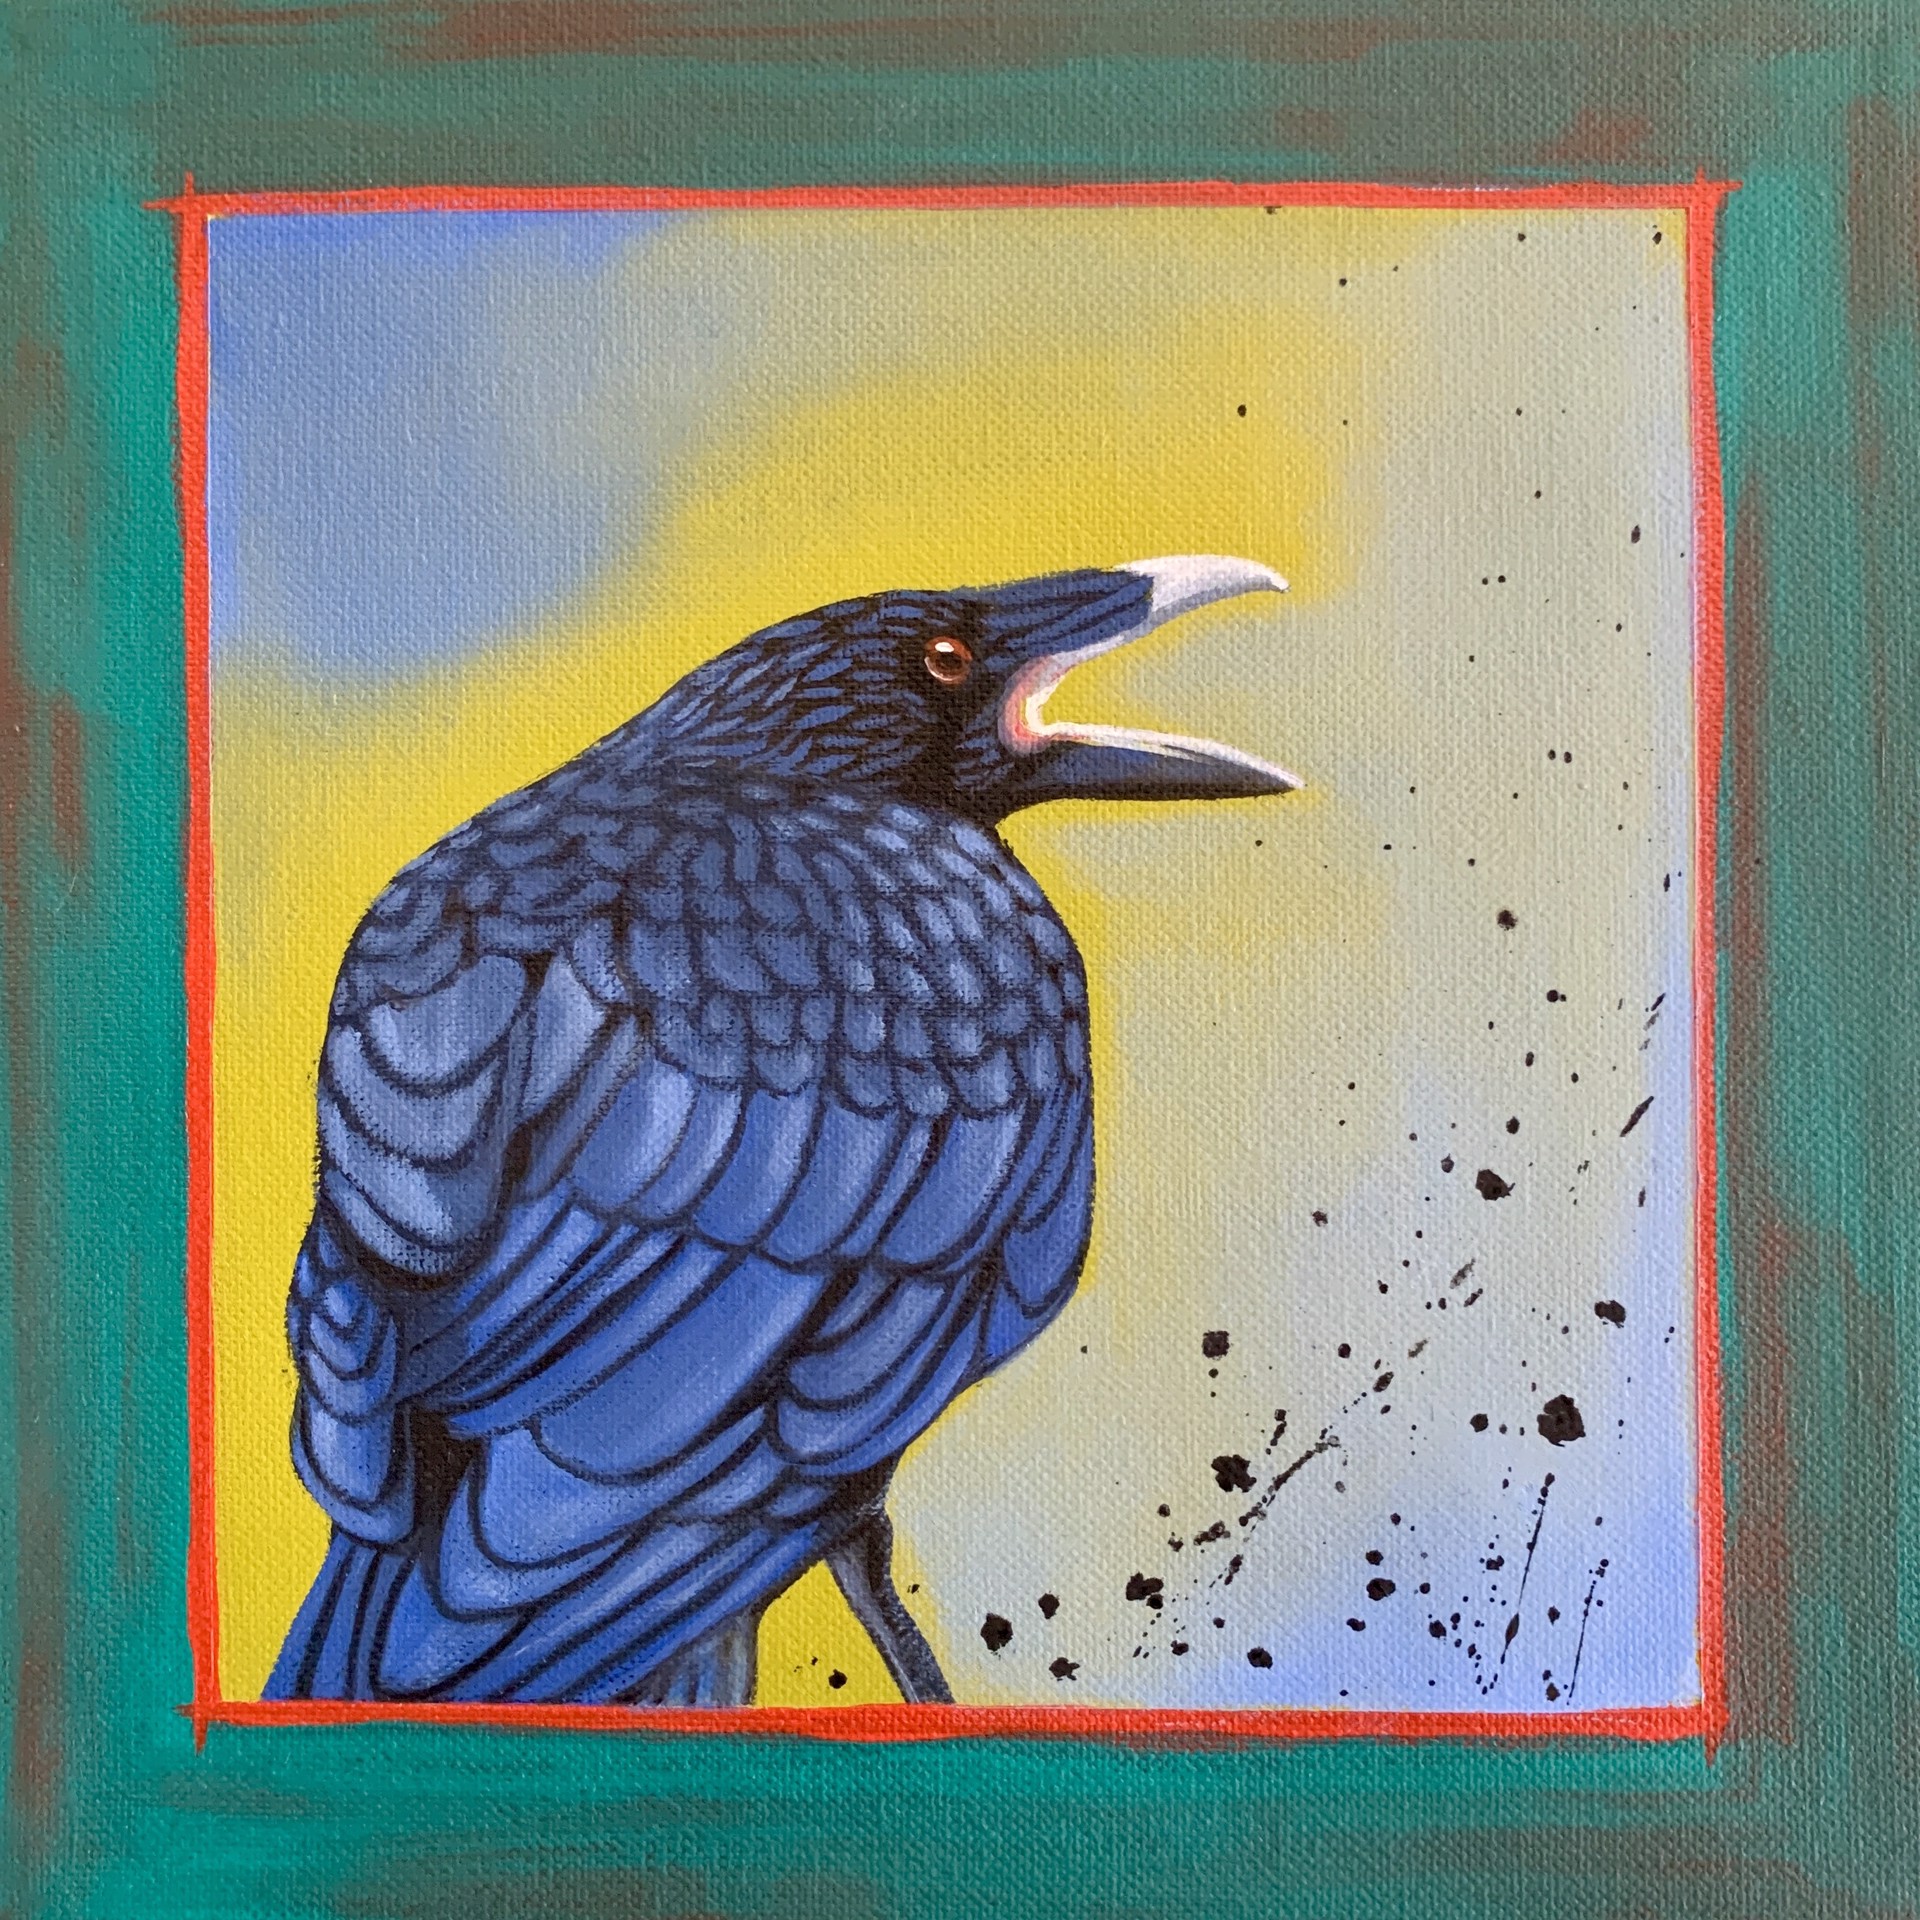 Raven Glory by Karen Clarkson